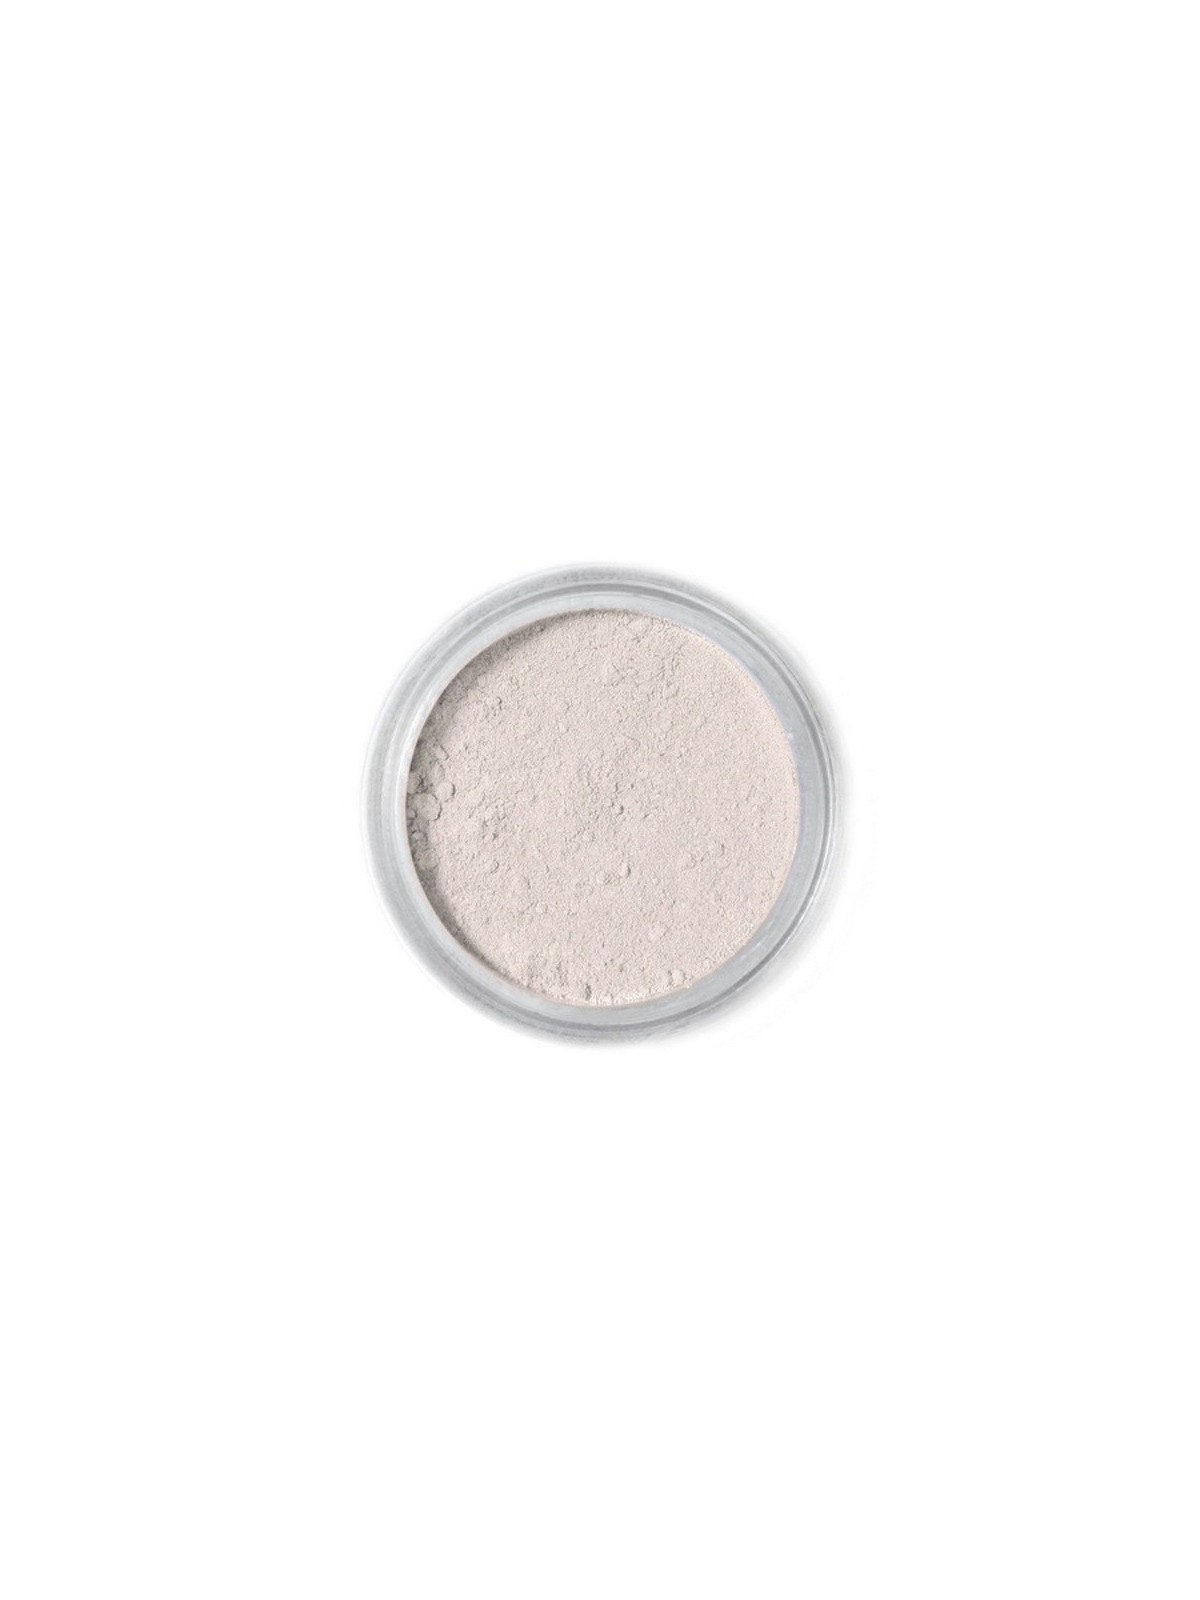 Edible dust color Fractal - Ivory, Ekrü (4 g)